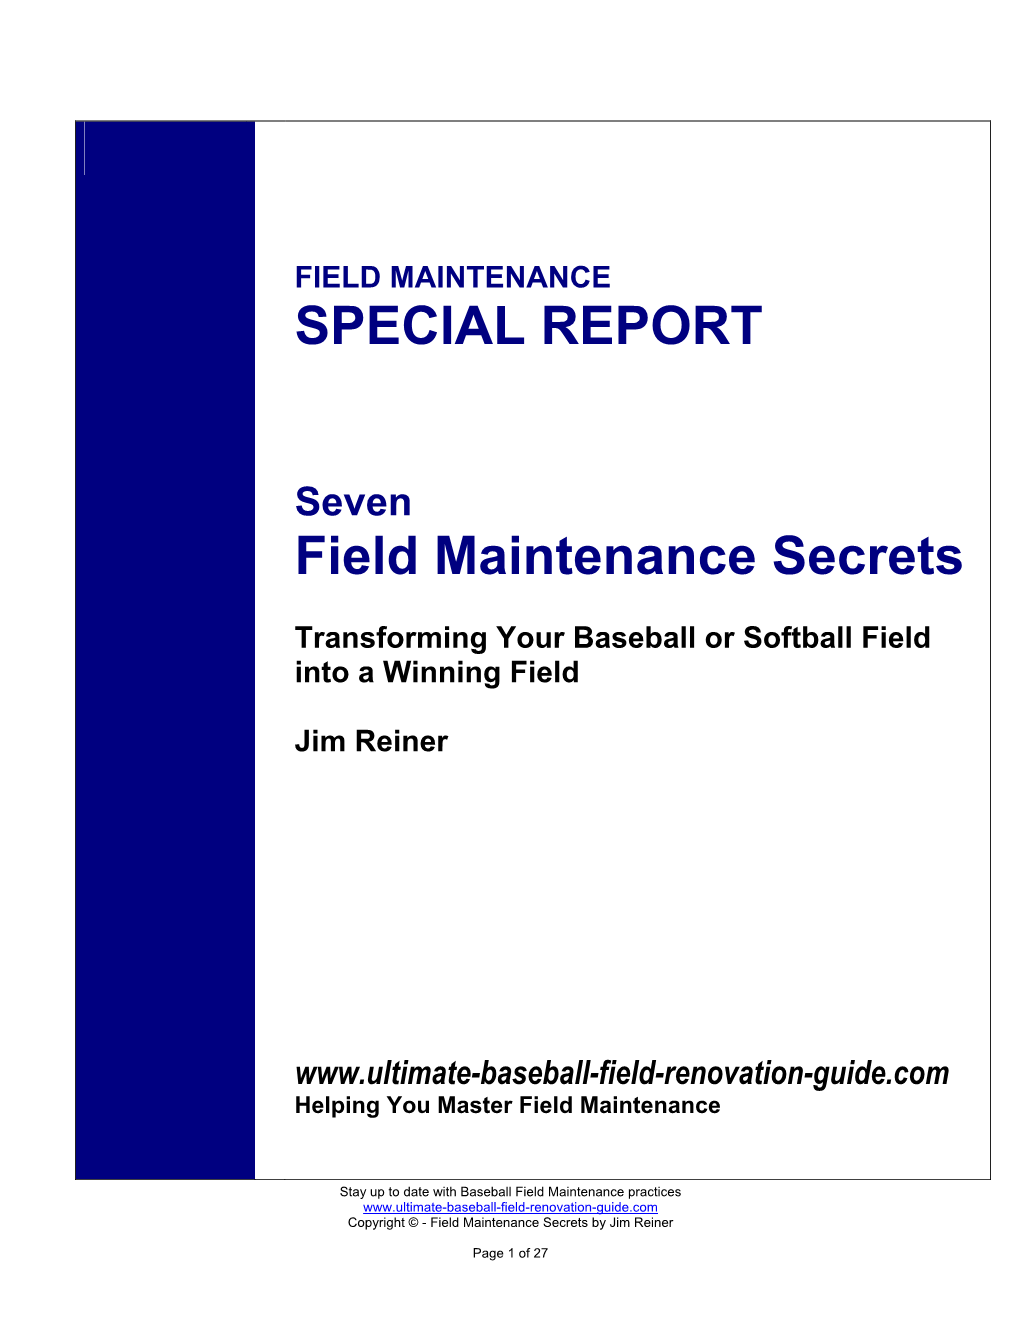 SPECIAL REPORT Field Maintenance Secrets